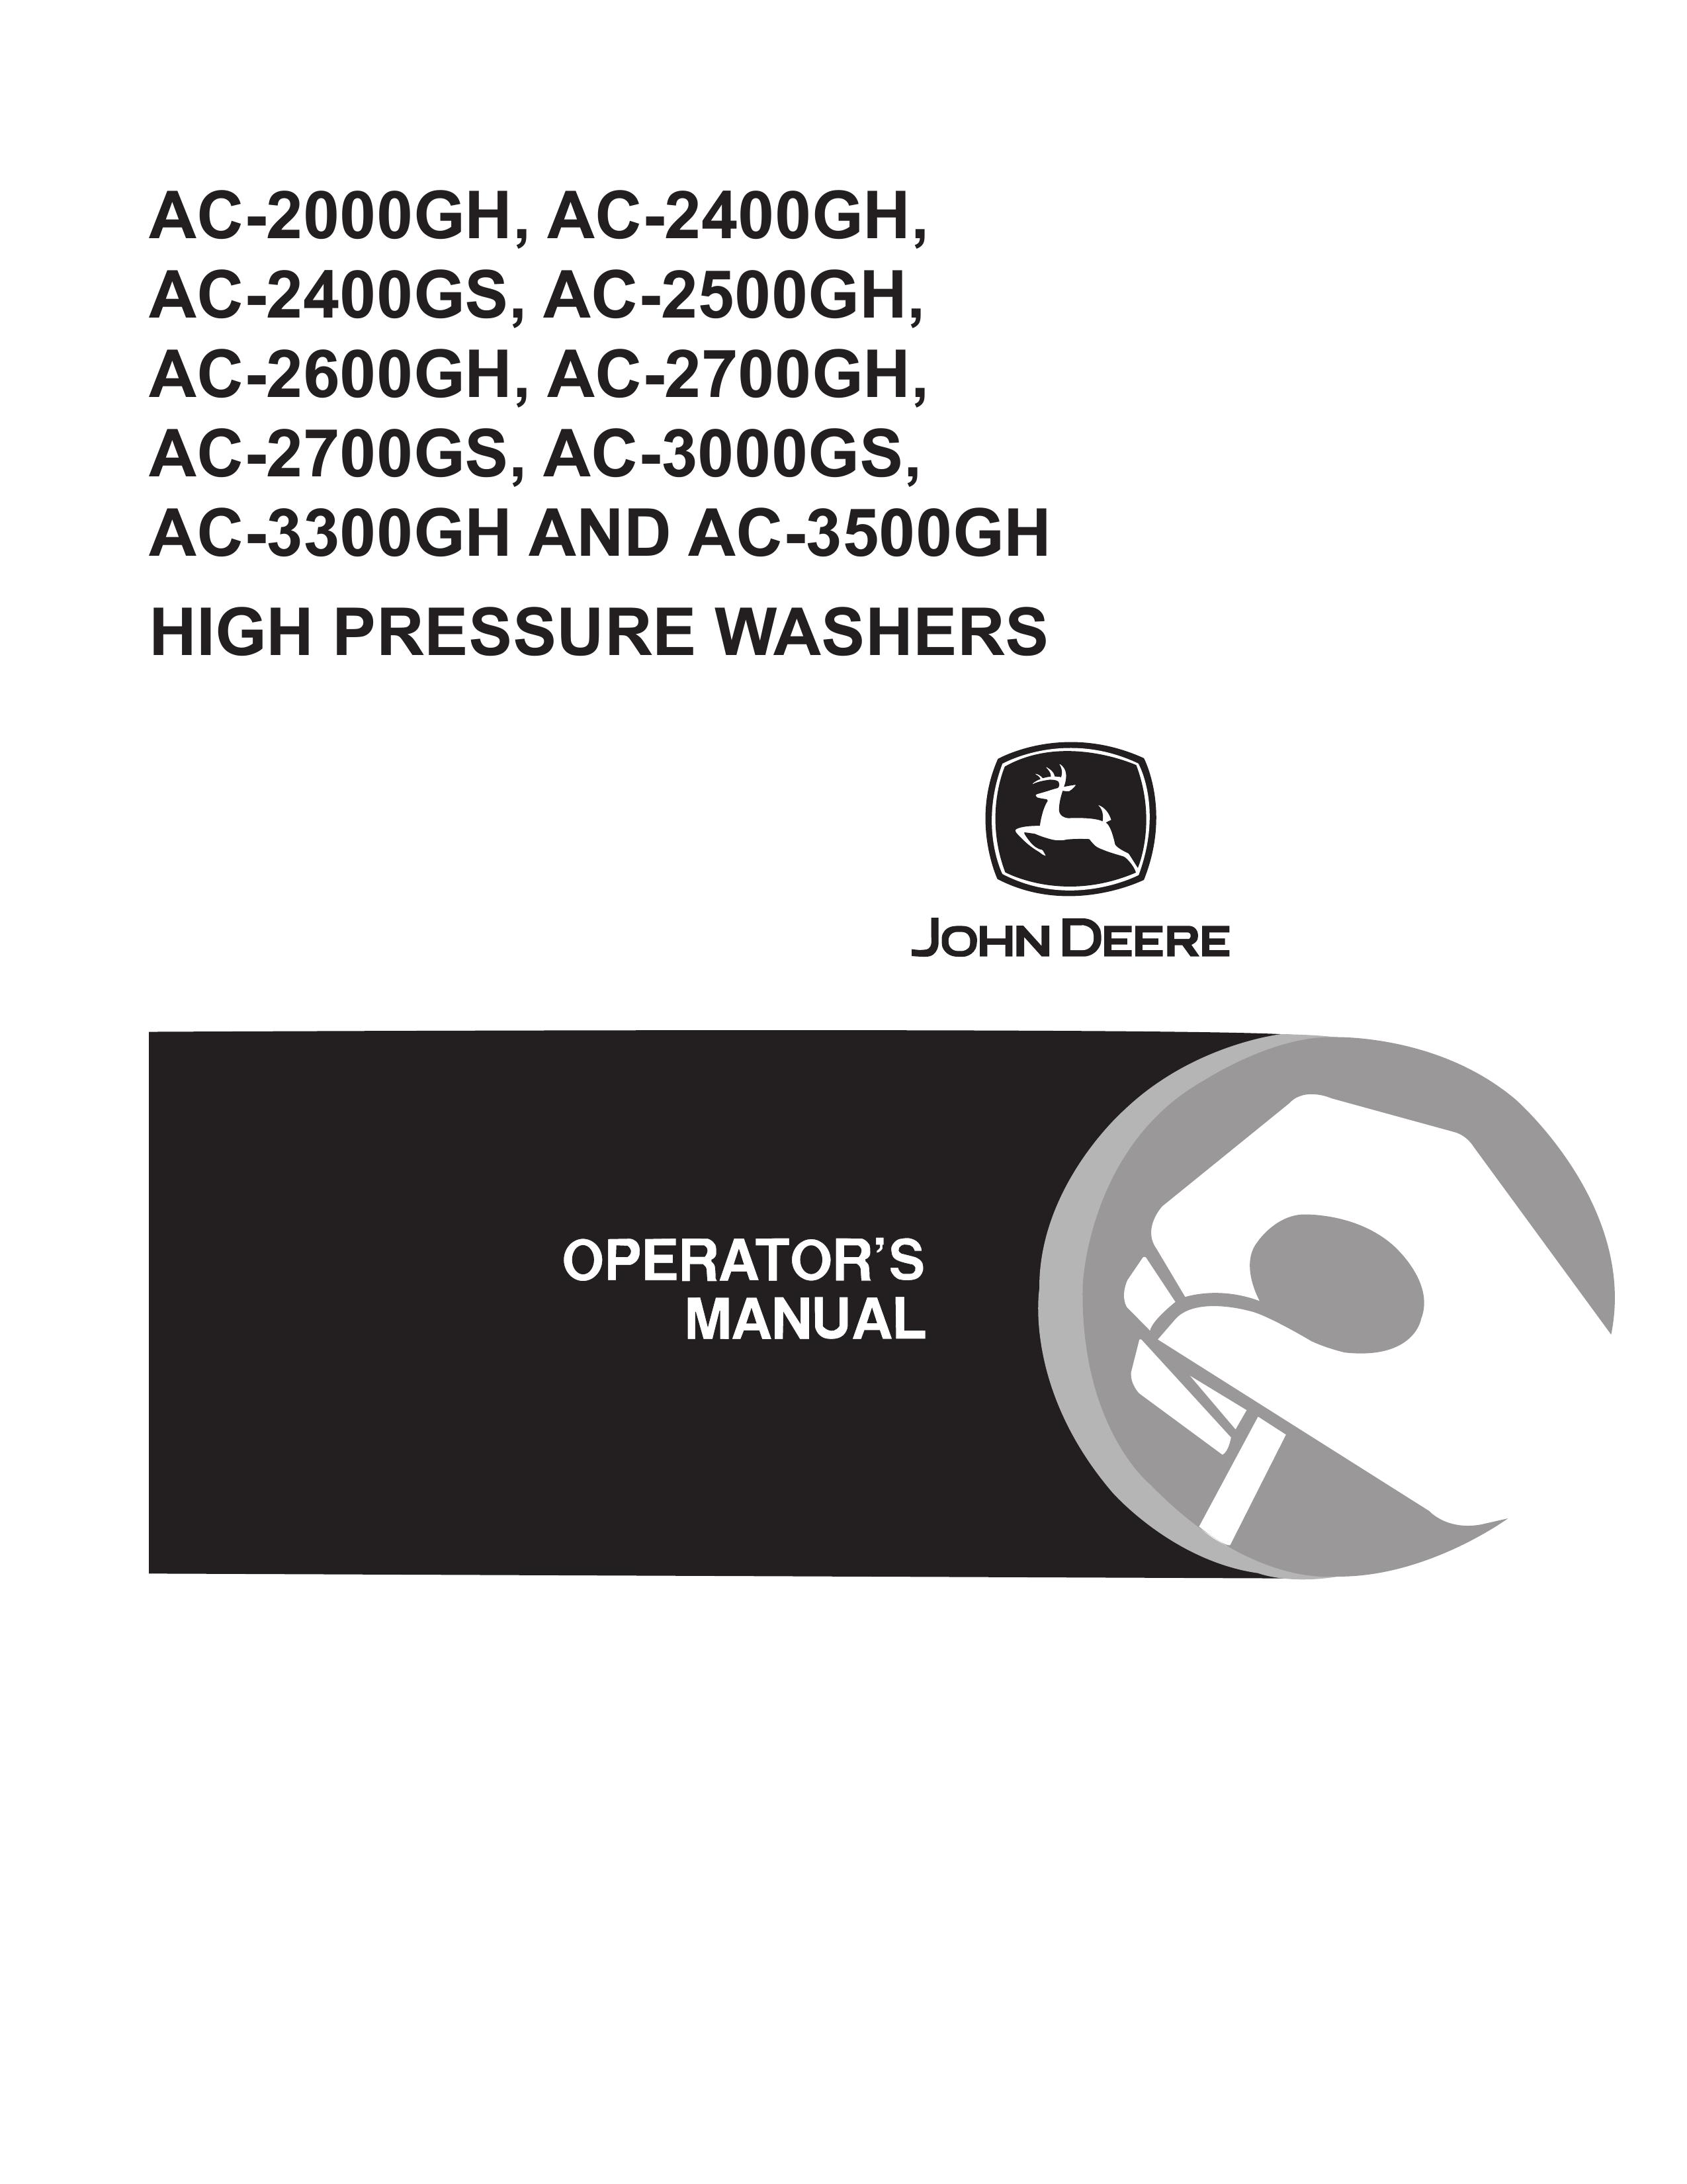 John Deere AC-2400GH Washer User Manual